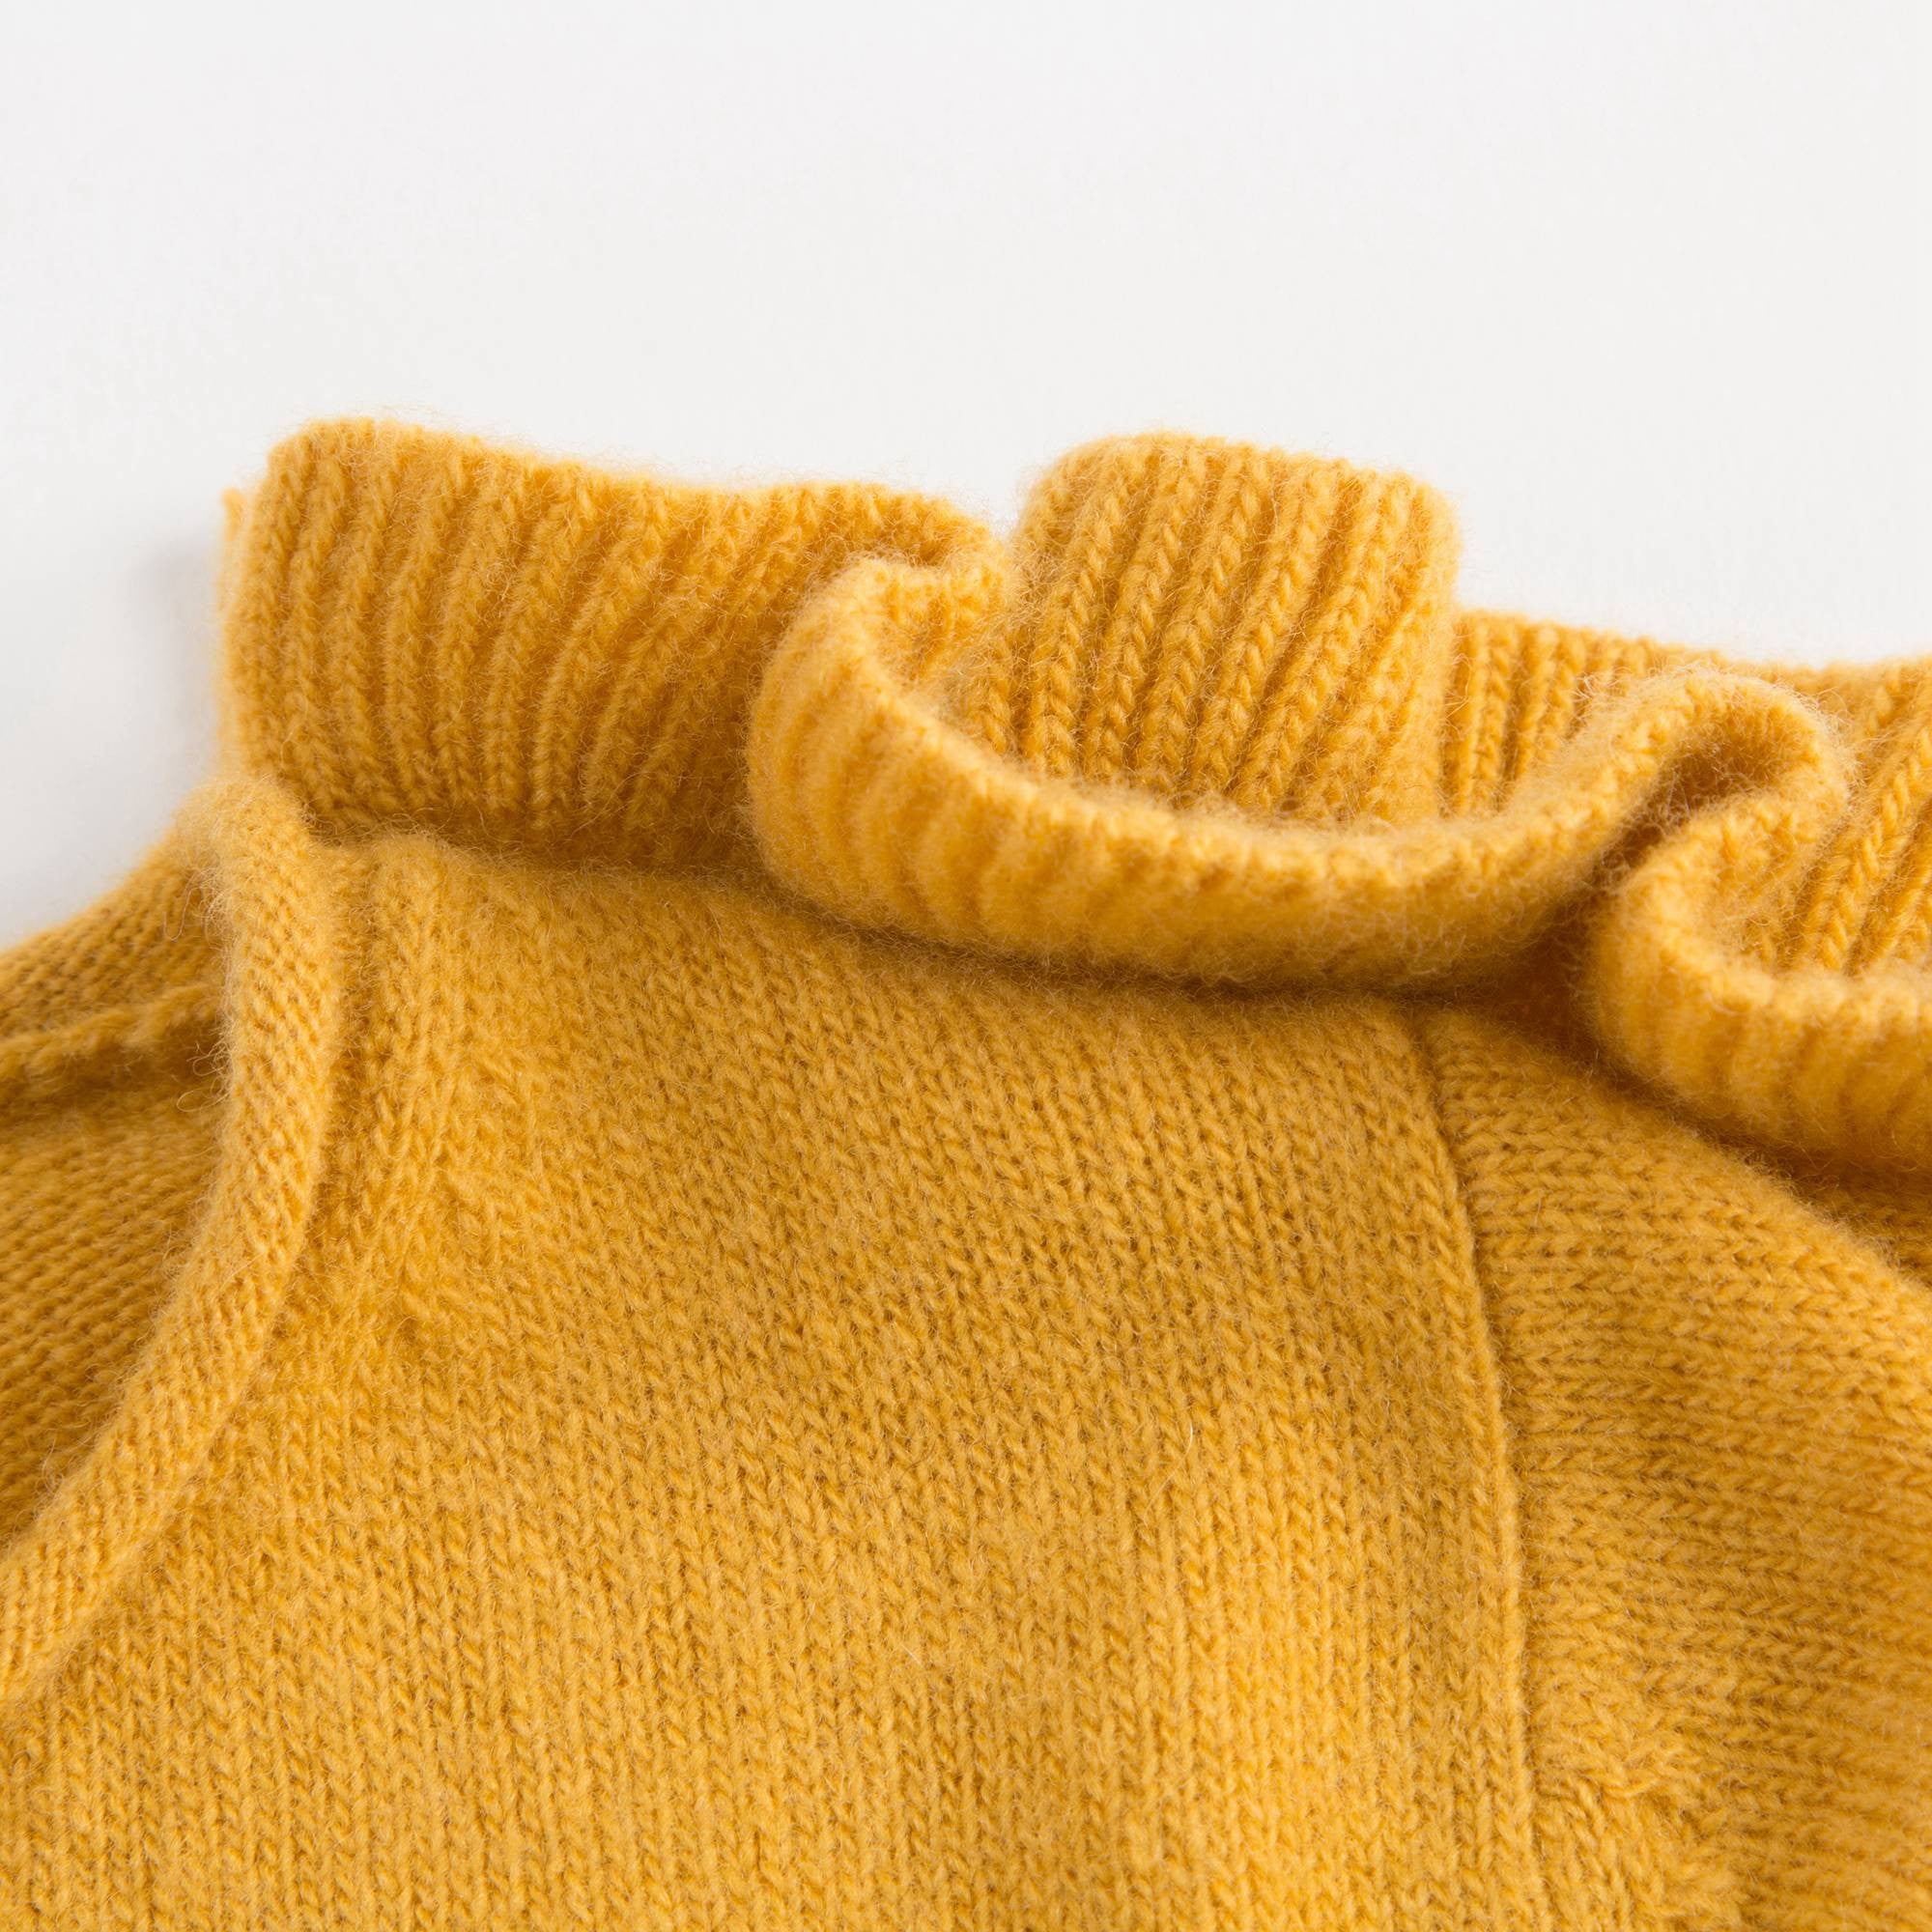 Girls Yellow Knitted Wool Cardigan With Ruffle